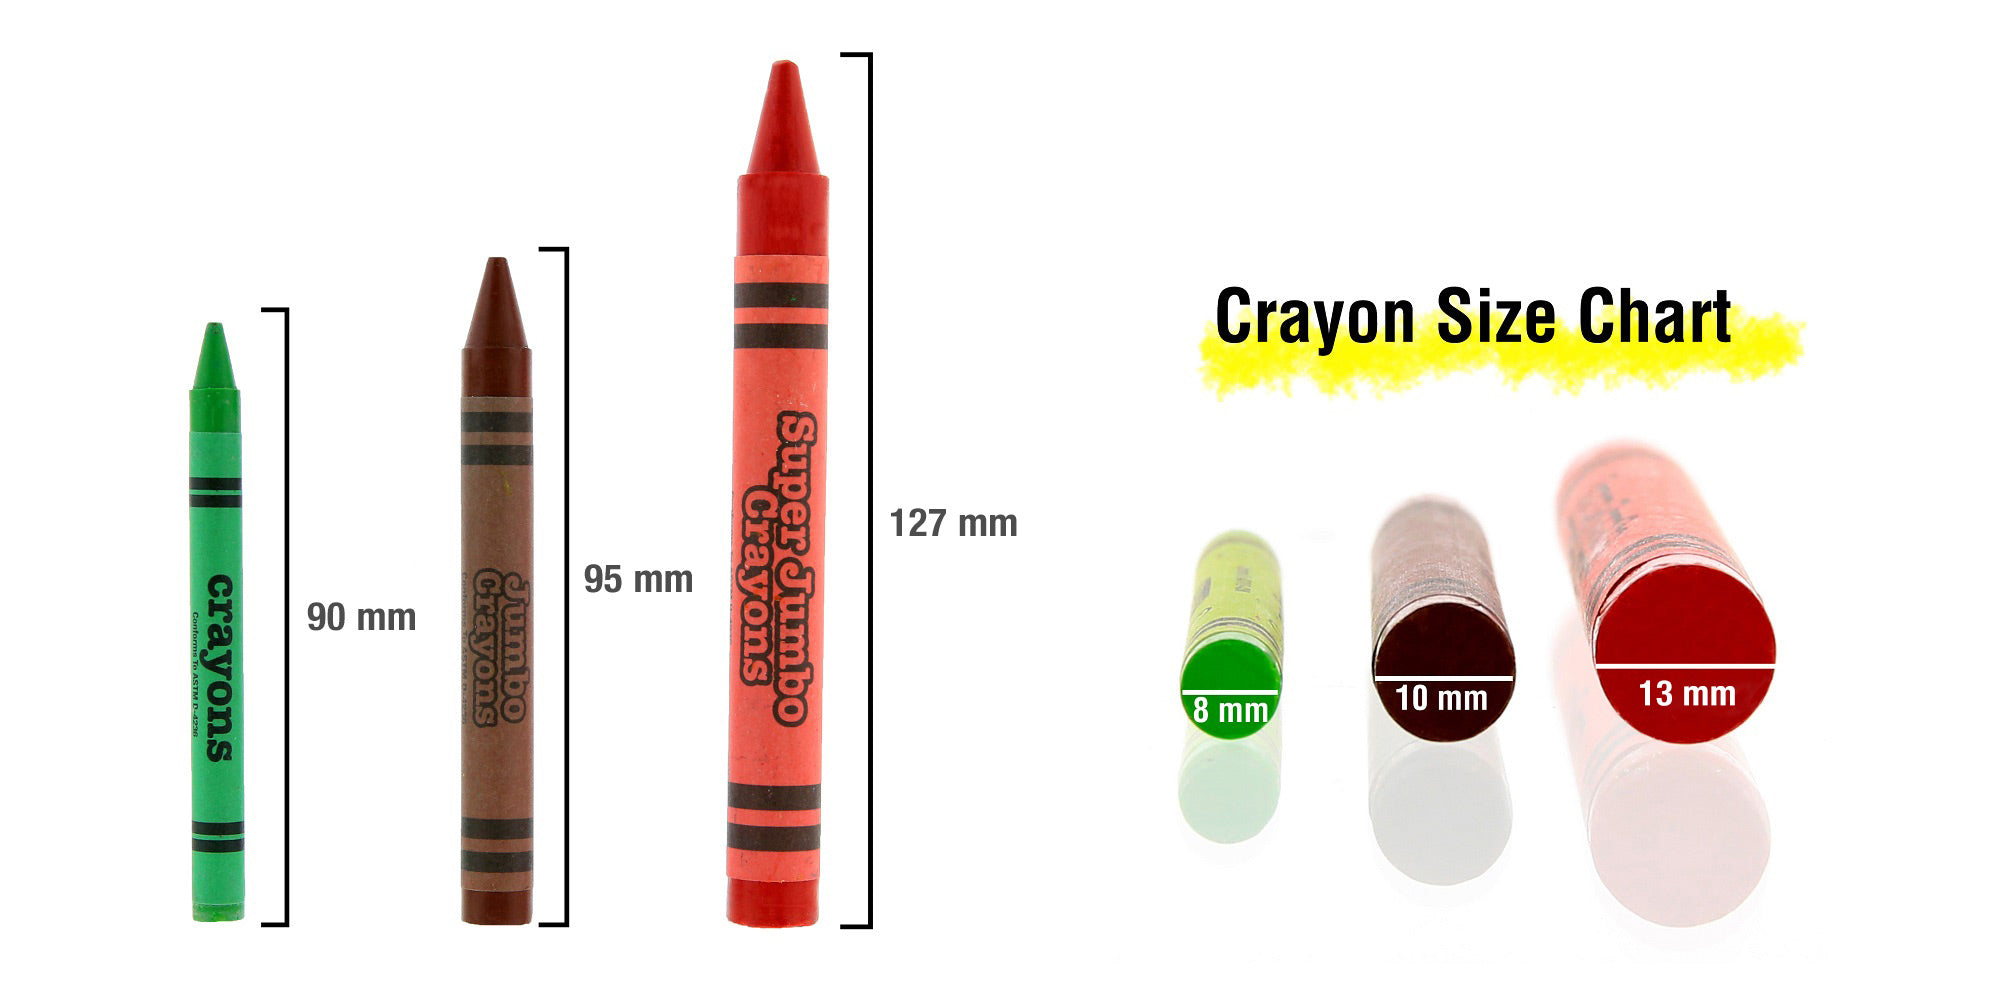 Premium Crayons Coloring Set | 16 Assorted Colors